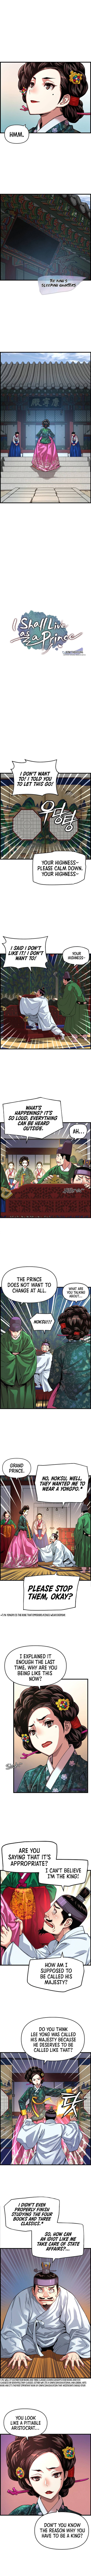 I Shall Live As a Prince Chapter 73 page 2